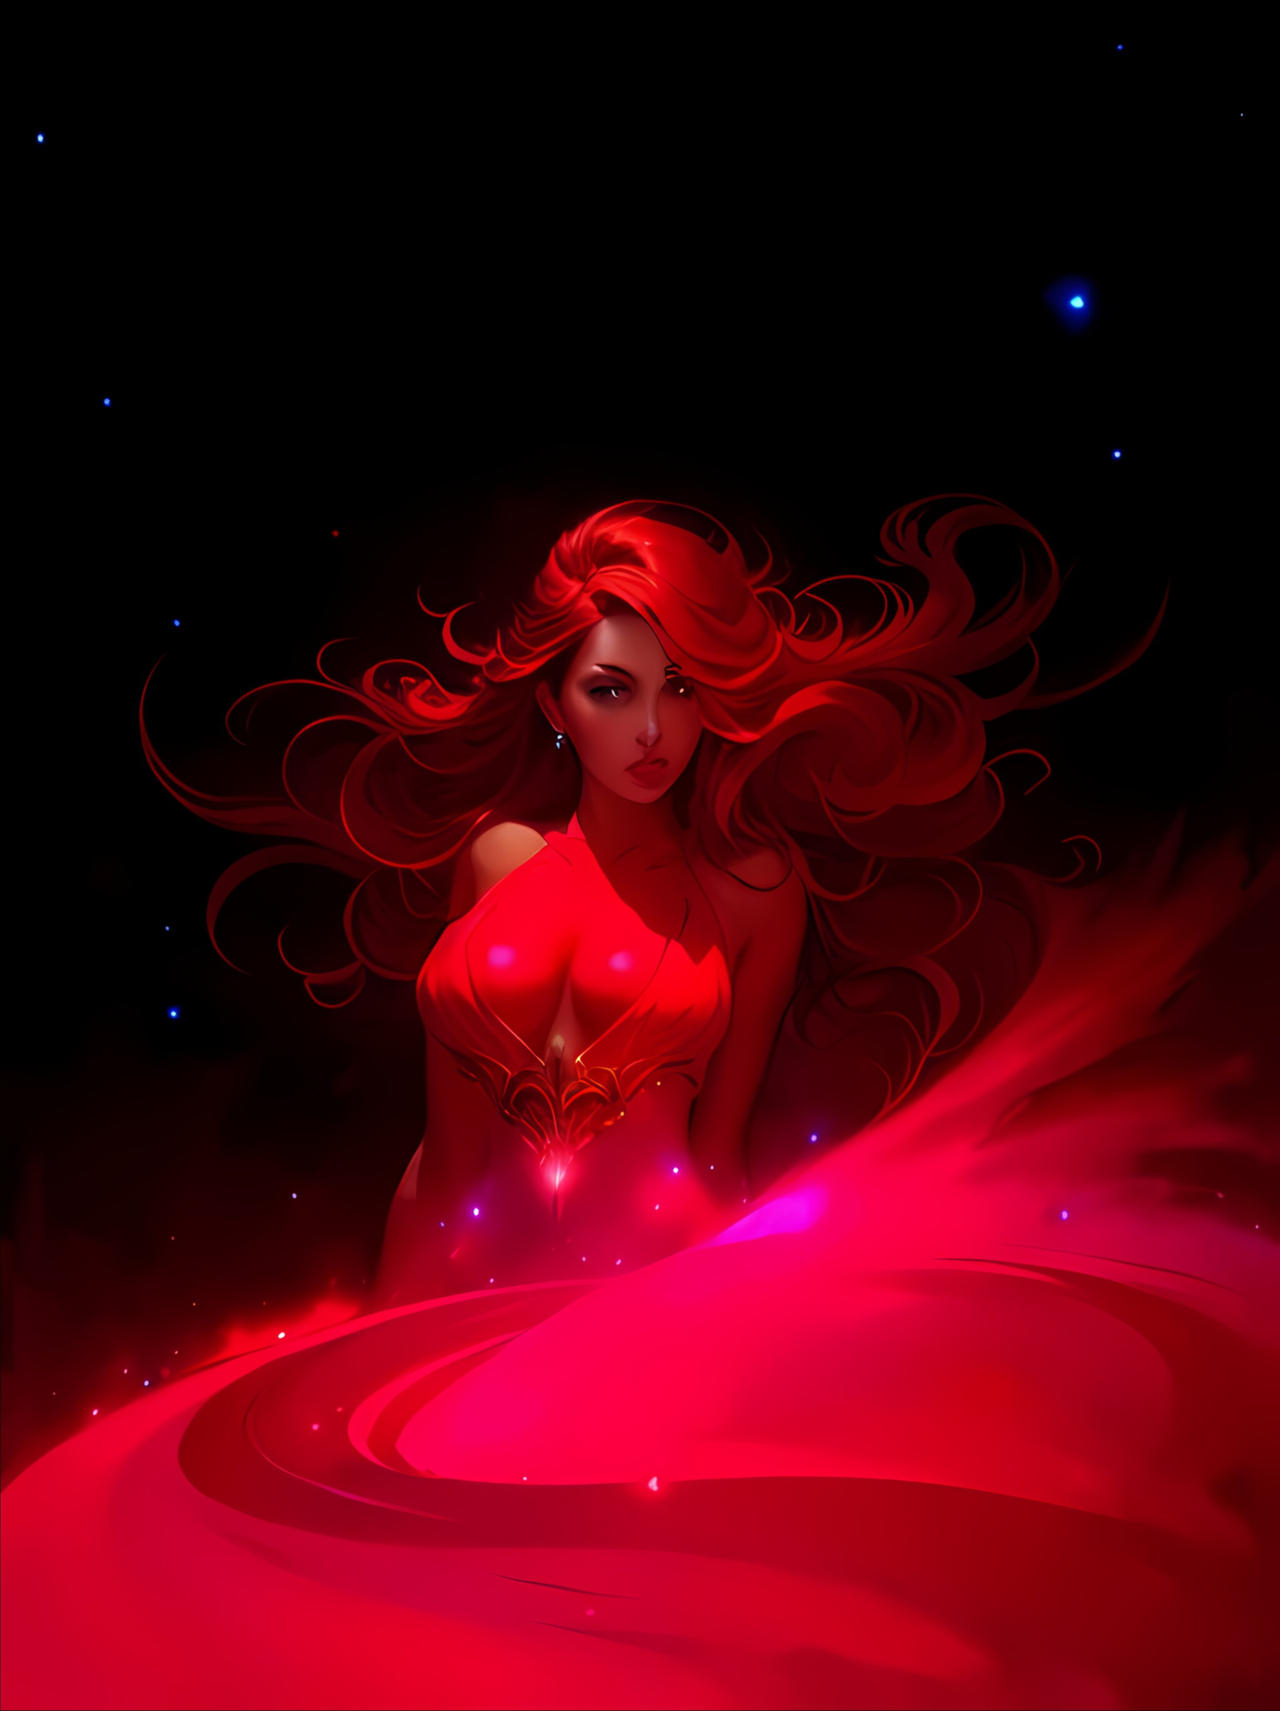 Scarlet Witch (37) by ZENART07 on DeviantArt